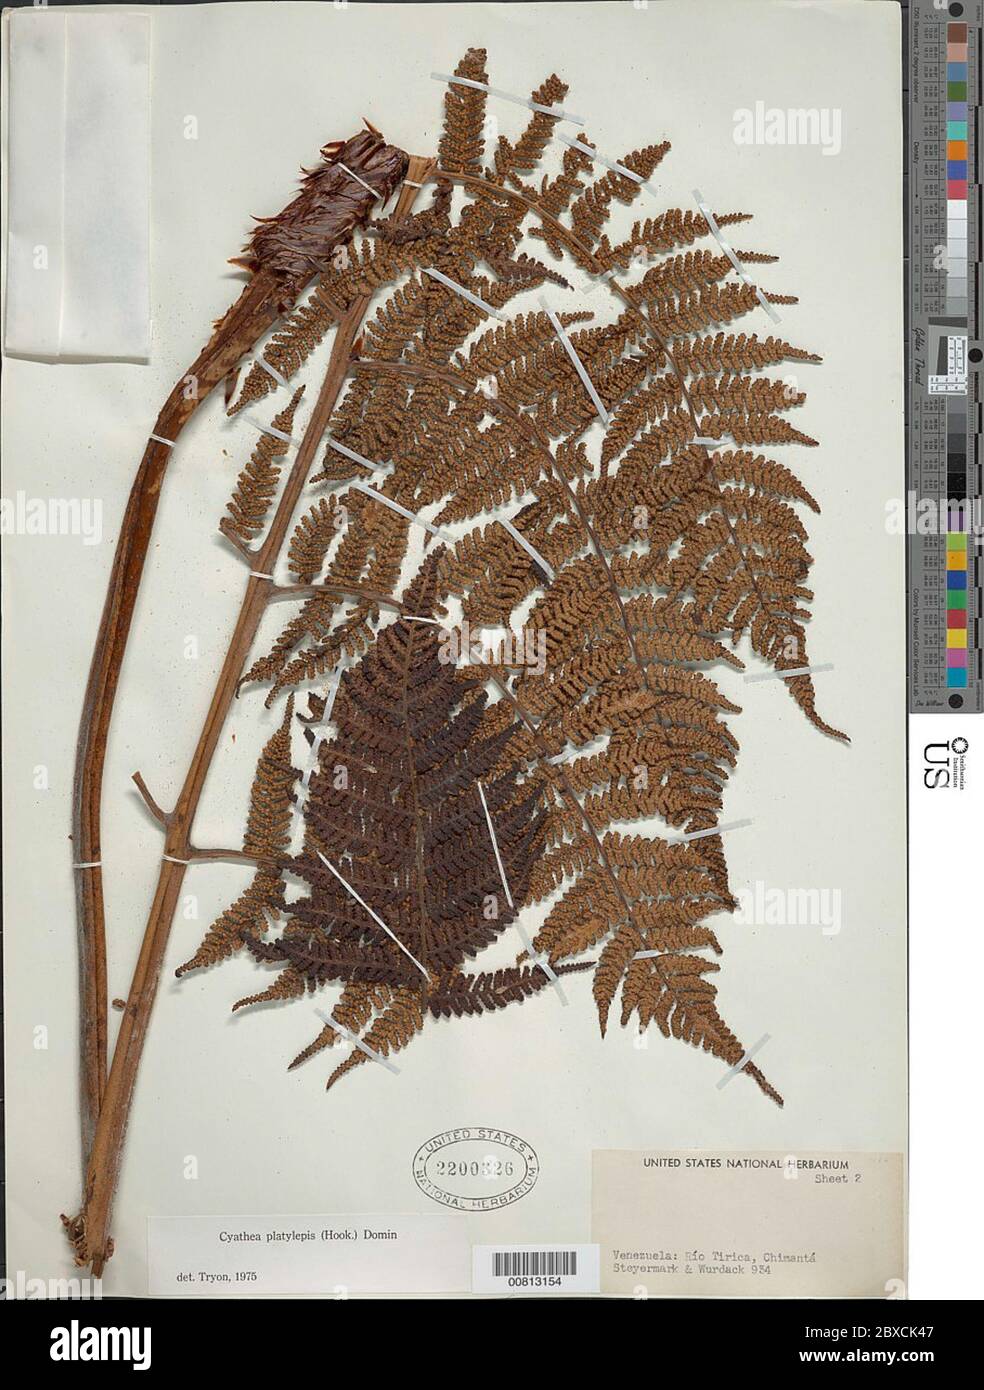 Cyathea platylepis Hook Domin Cyathea platylepis Hook Domin. Stock Photo